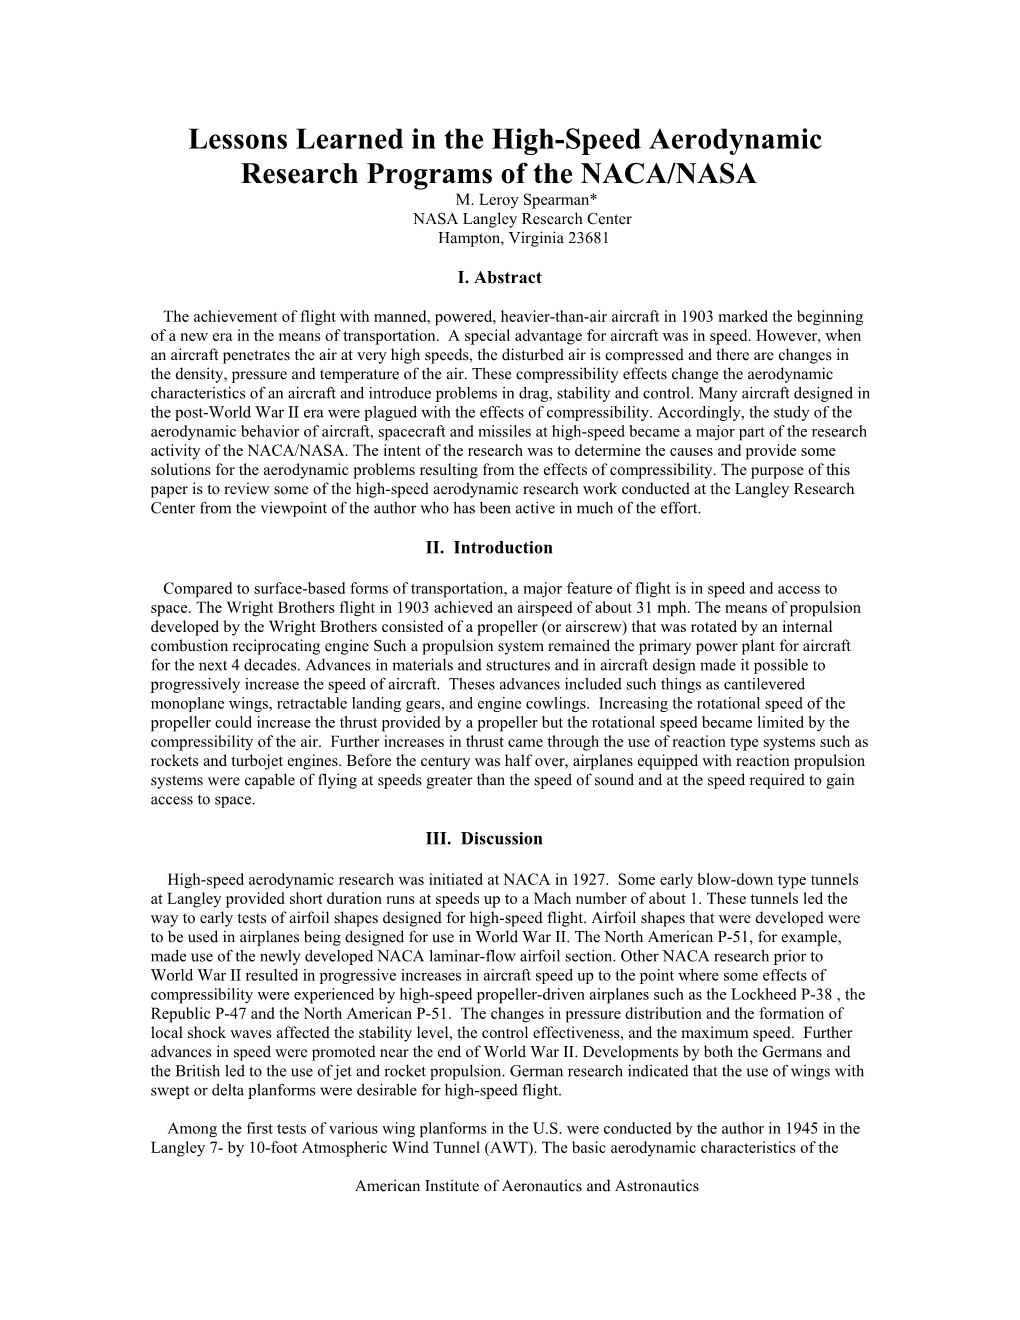 High-Speed Aerodynamic Research Programs of the NACA/NASA M